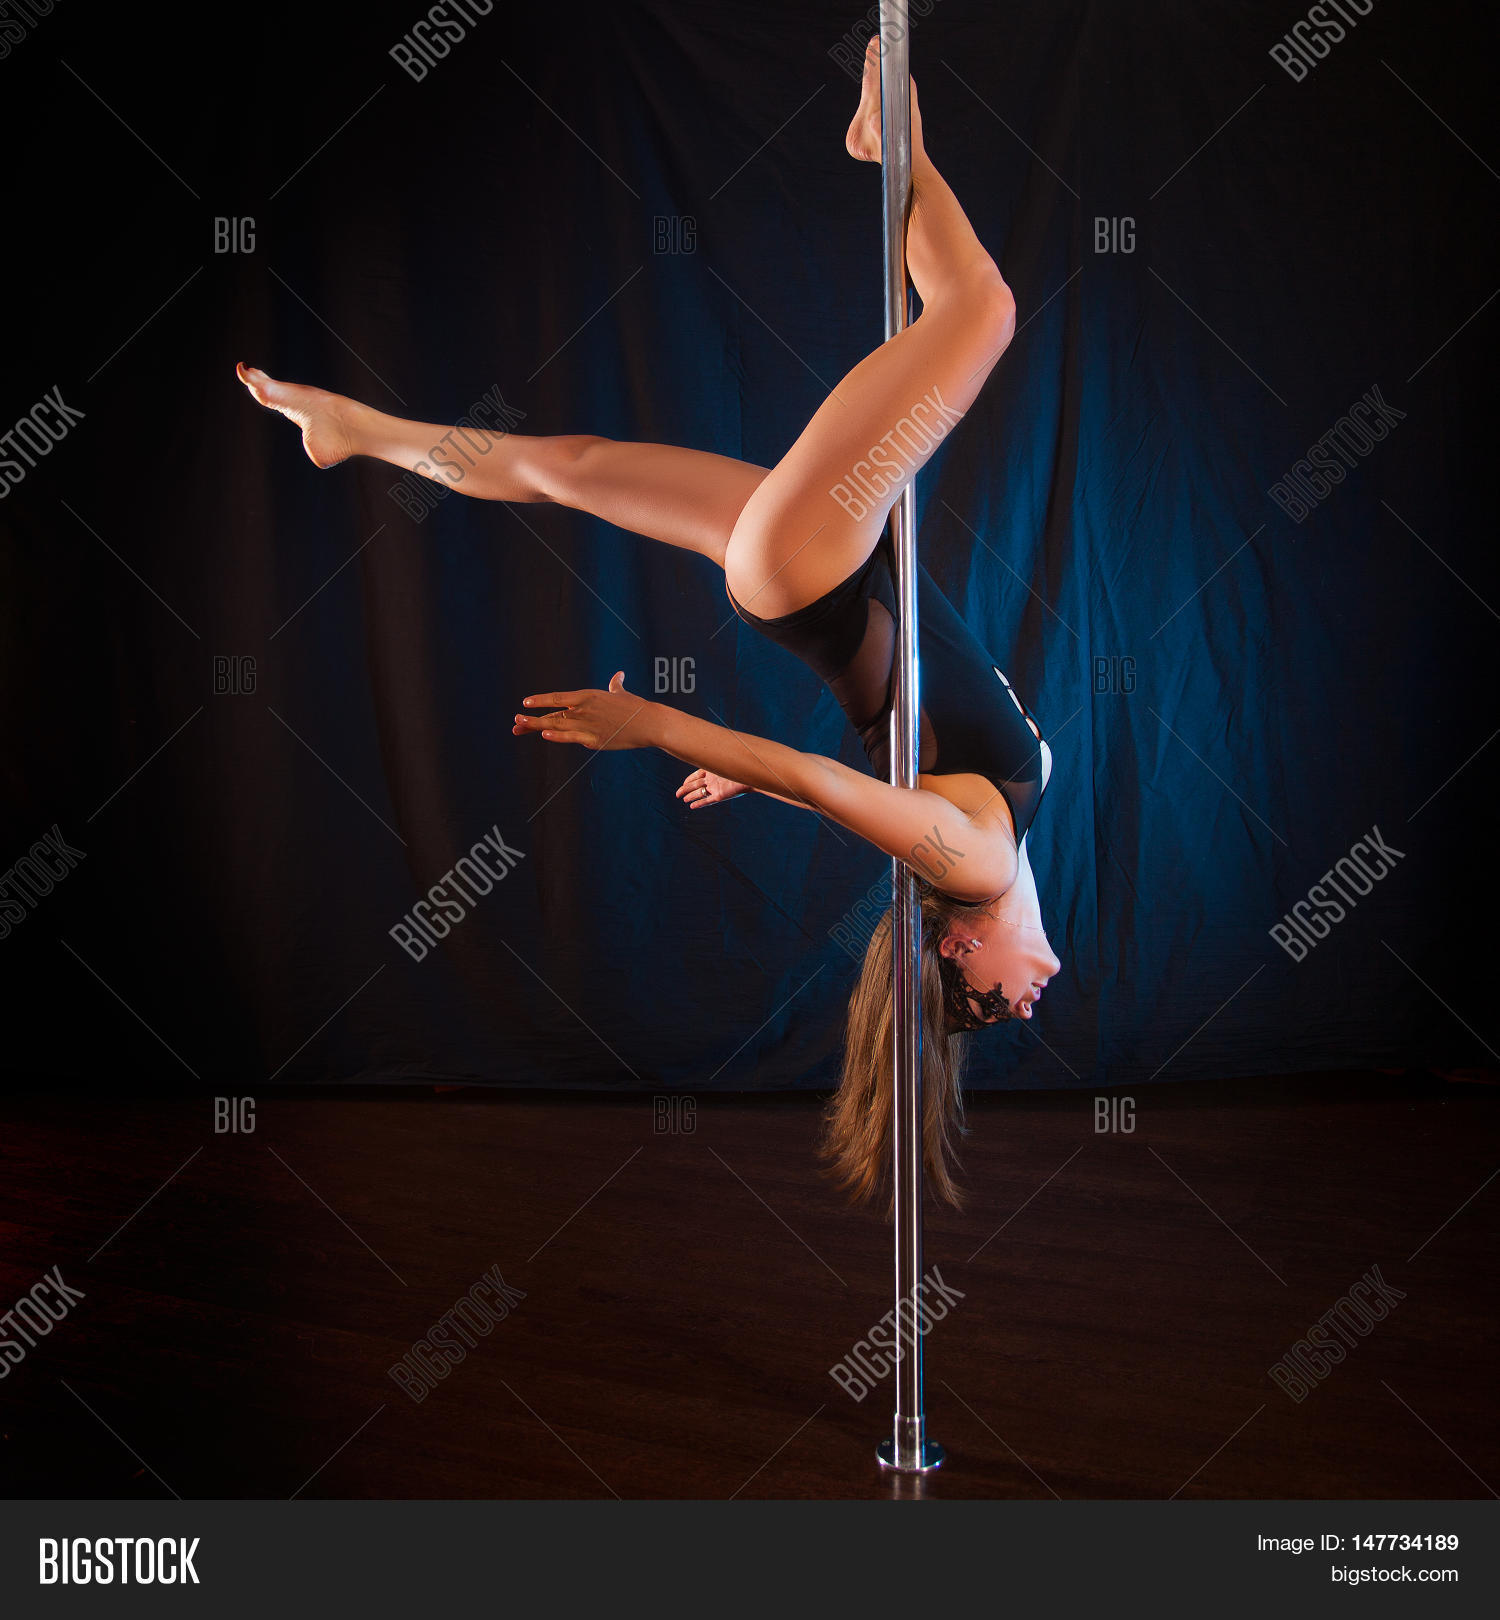 brad drenckhahn add sexy girls pole dancing photo